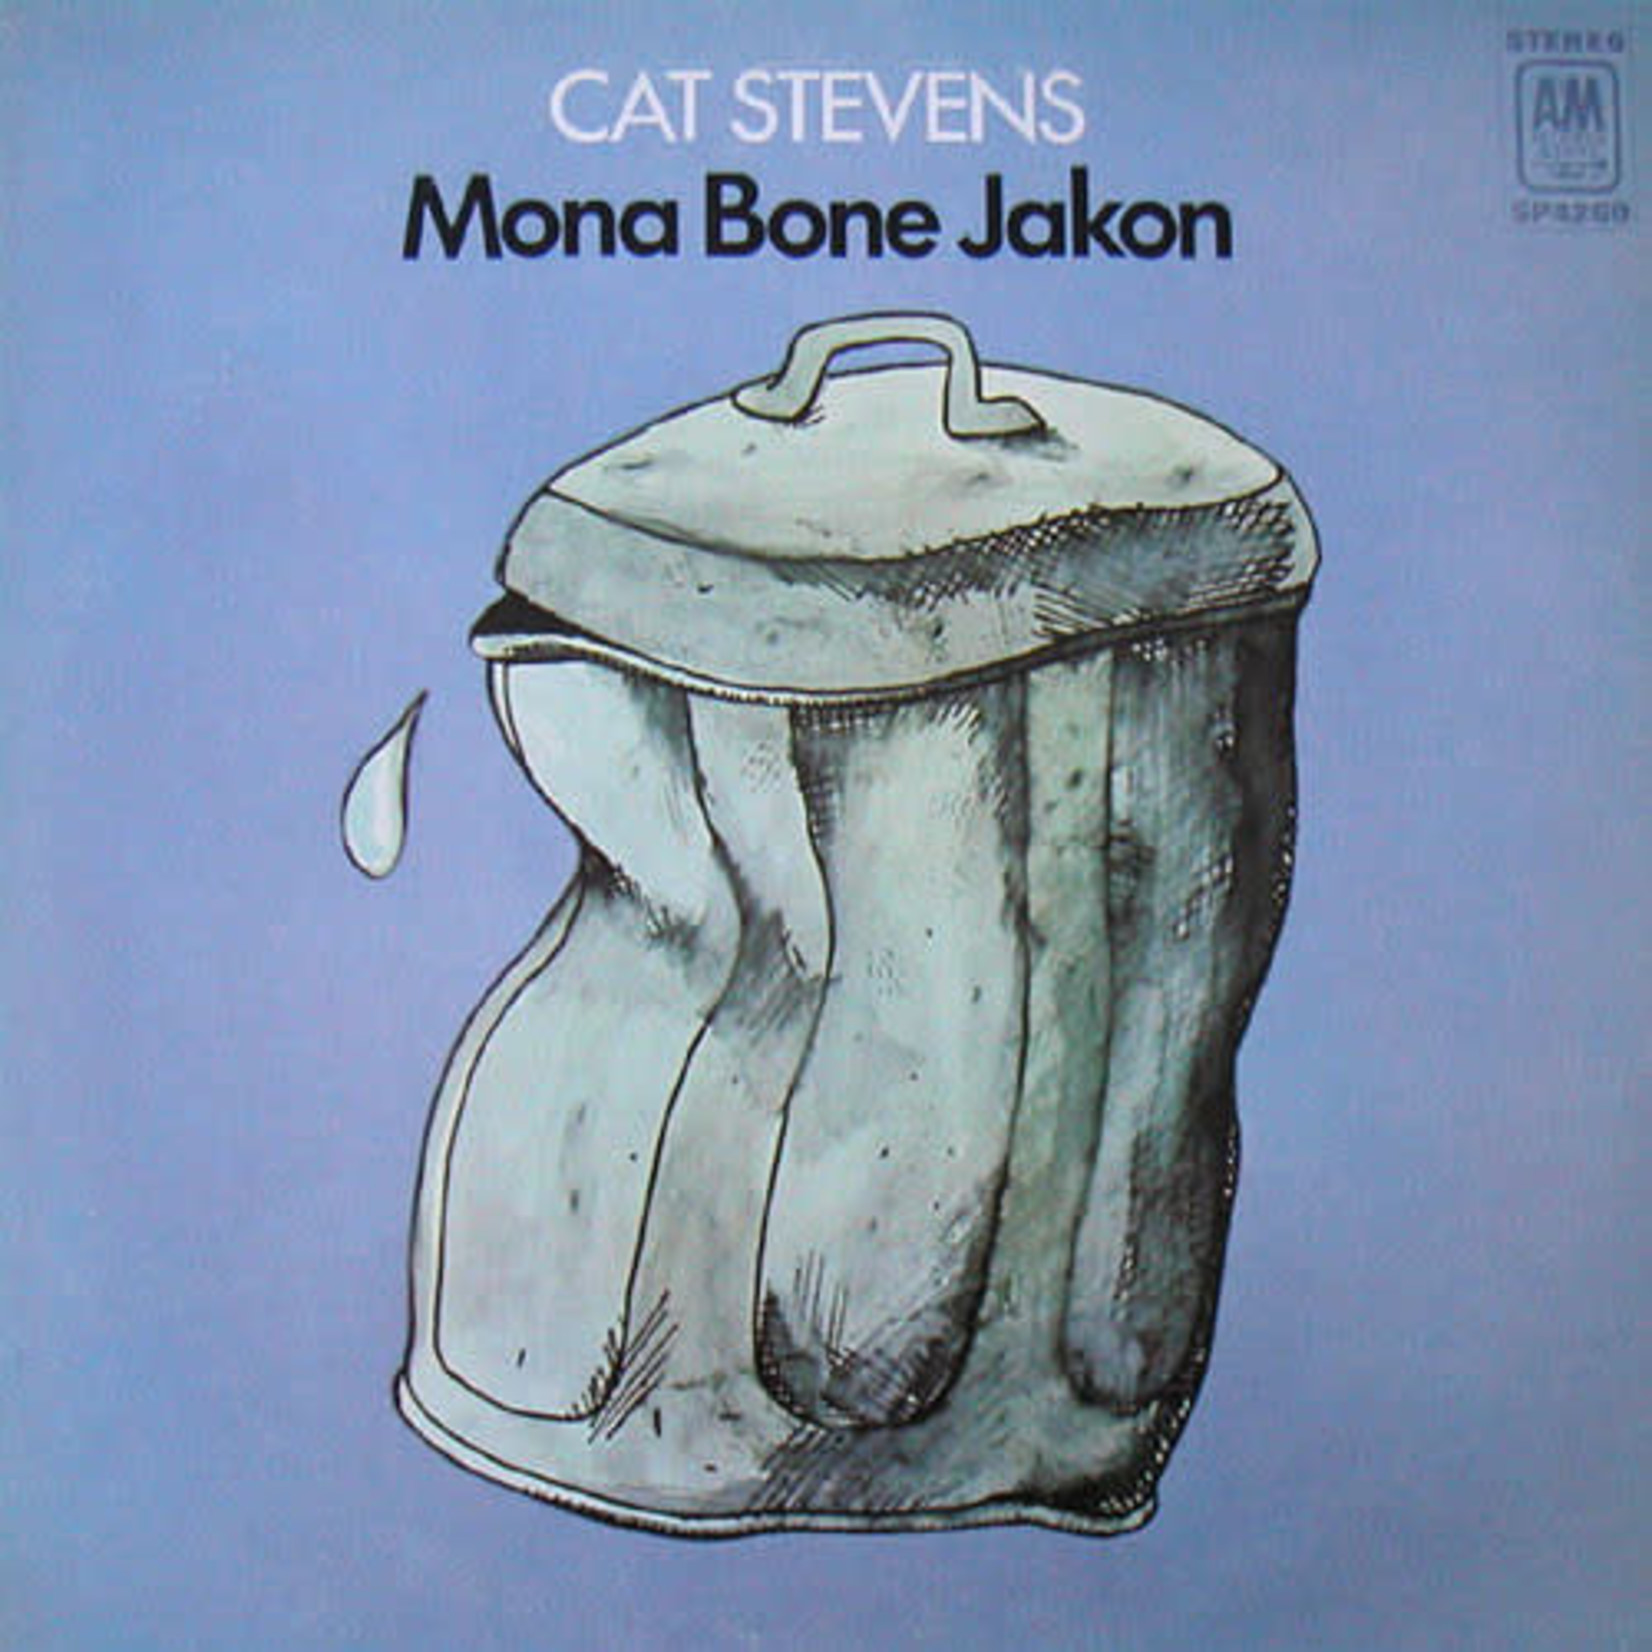 Cat Stevens Cat Stevens – Mona Bone Jakon (VG, 1970, LP, A&M Records – SP-4260, Canada)